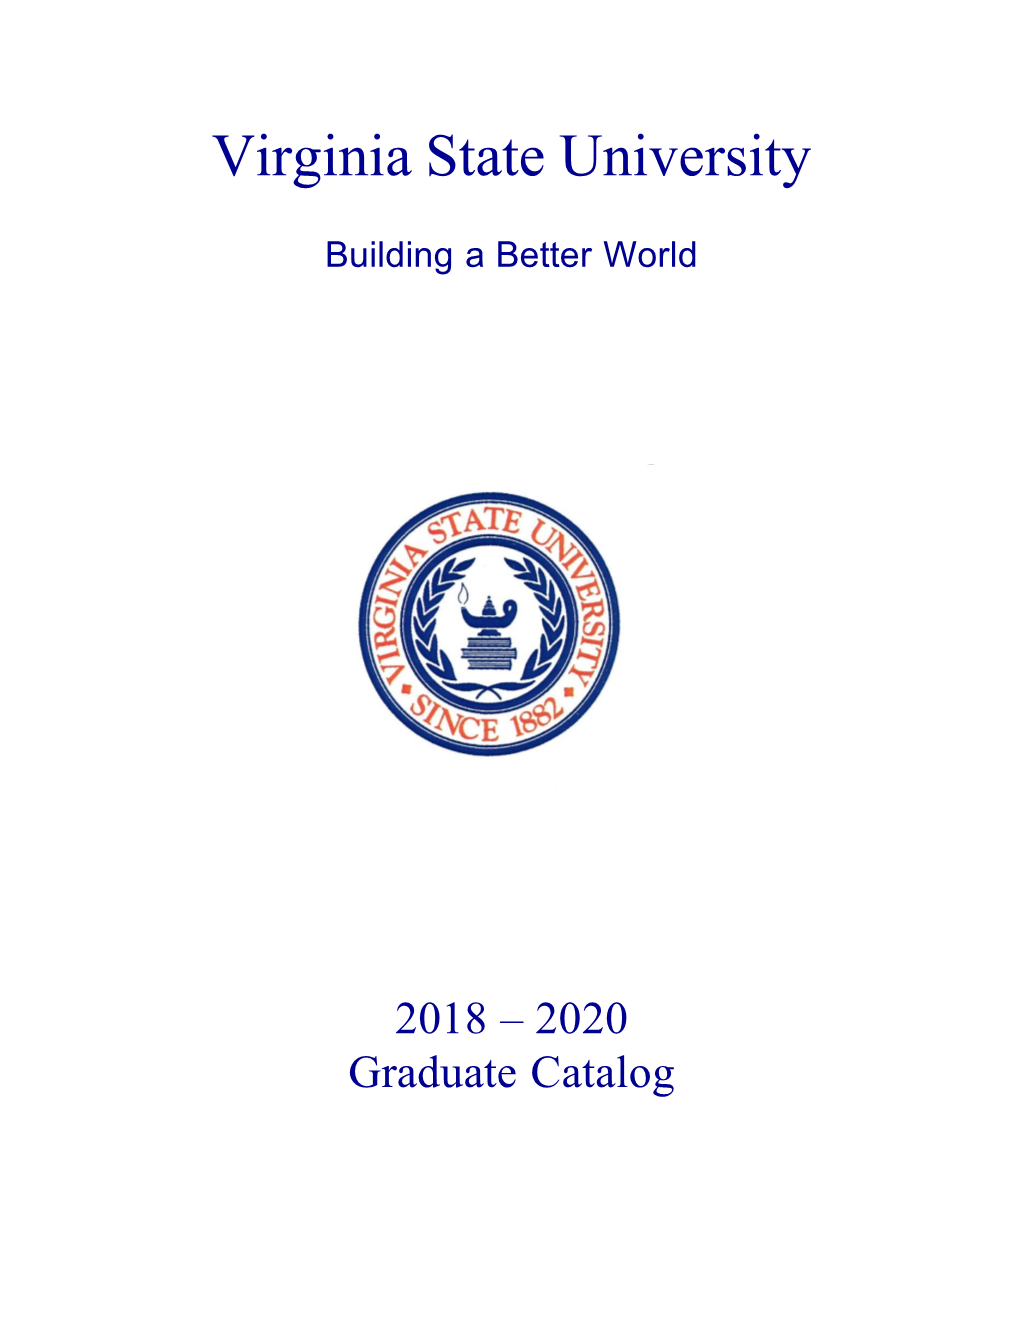 Graduate Catalog 2018-2020